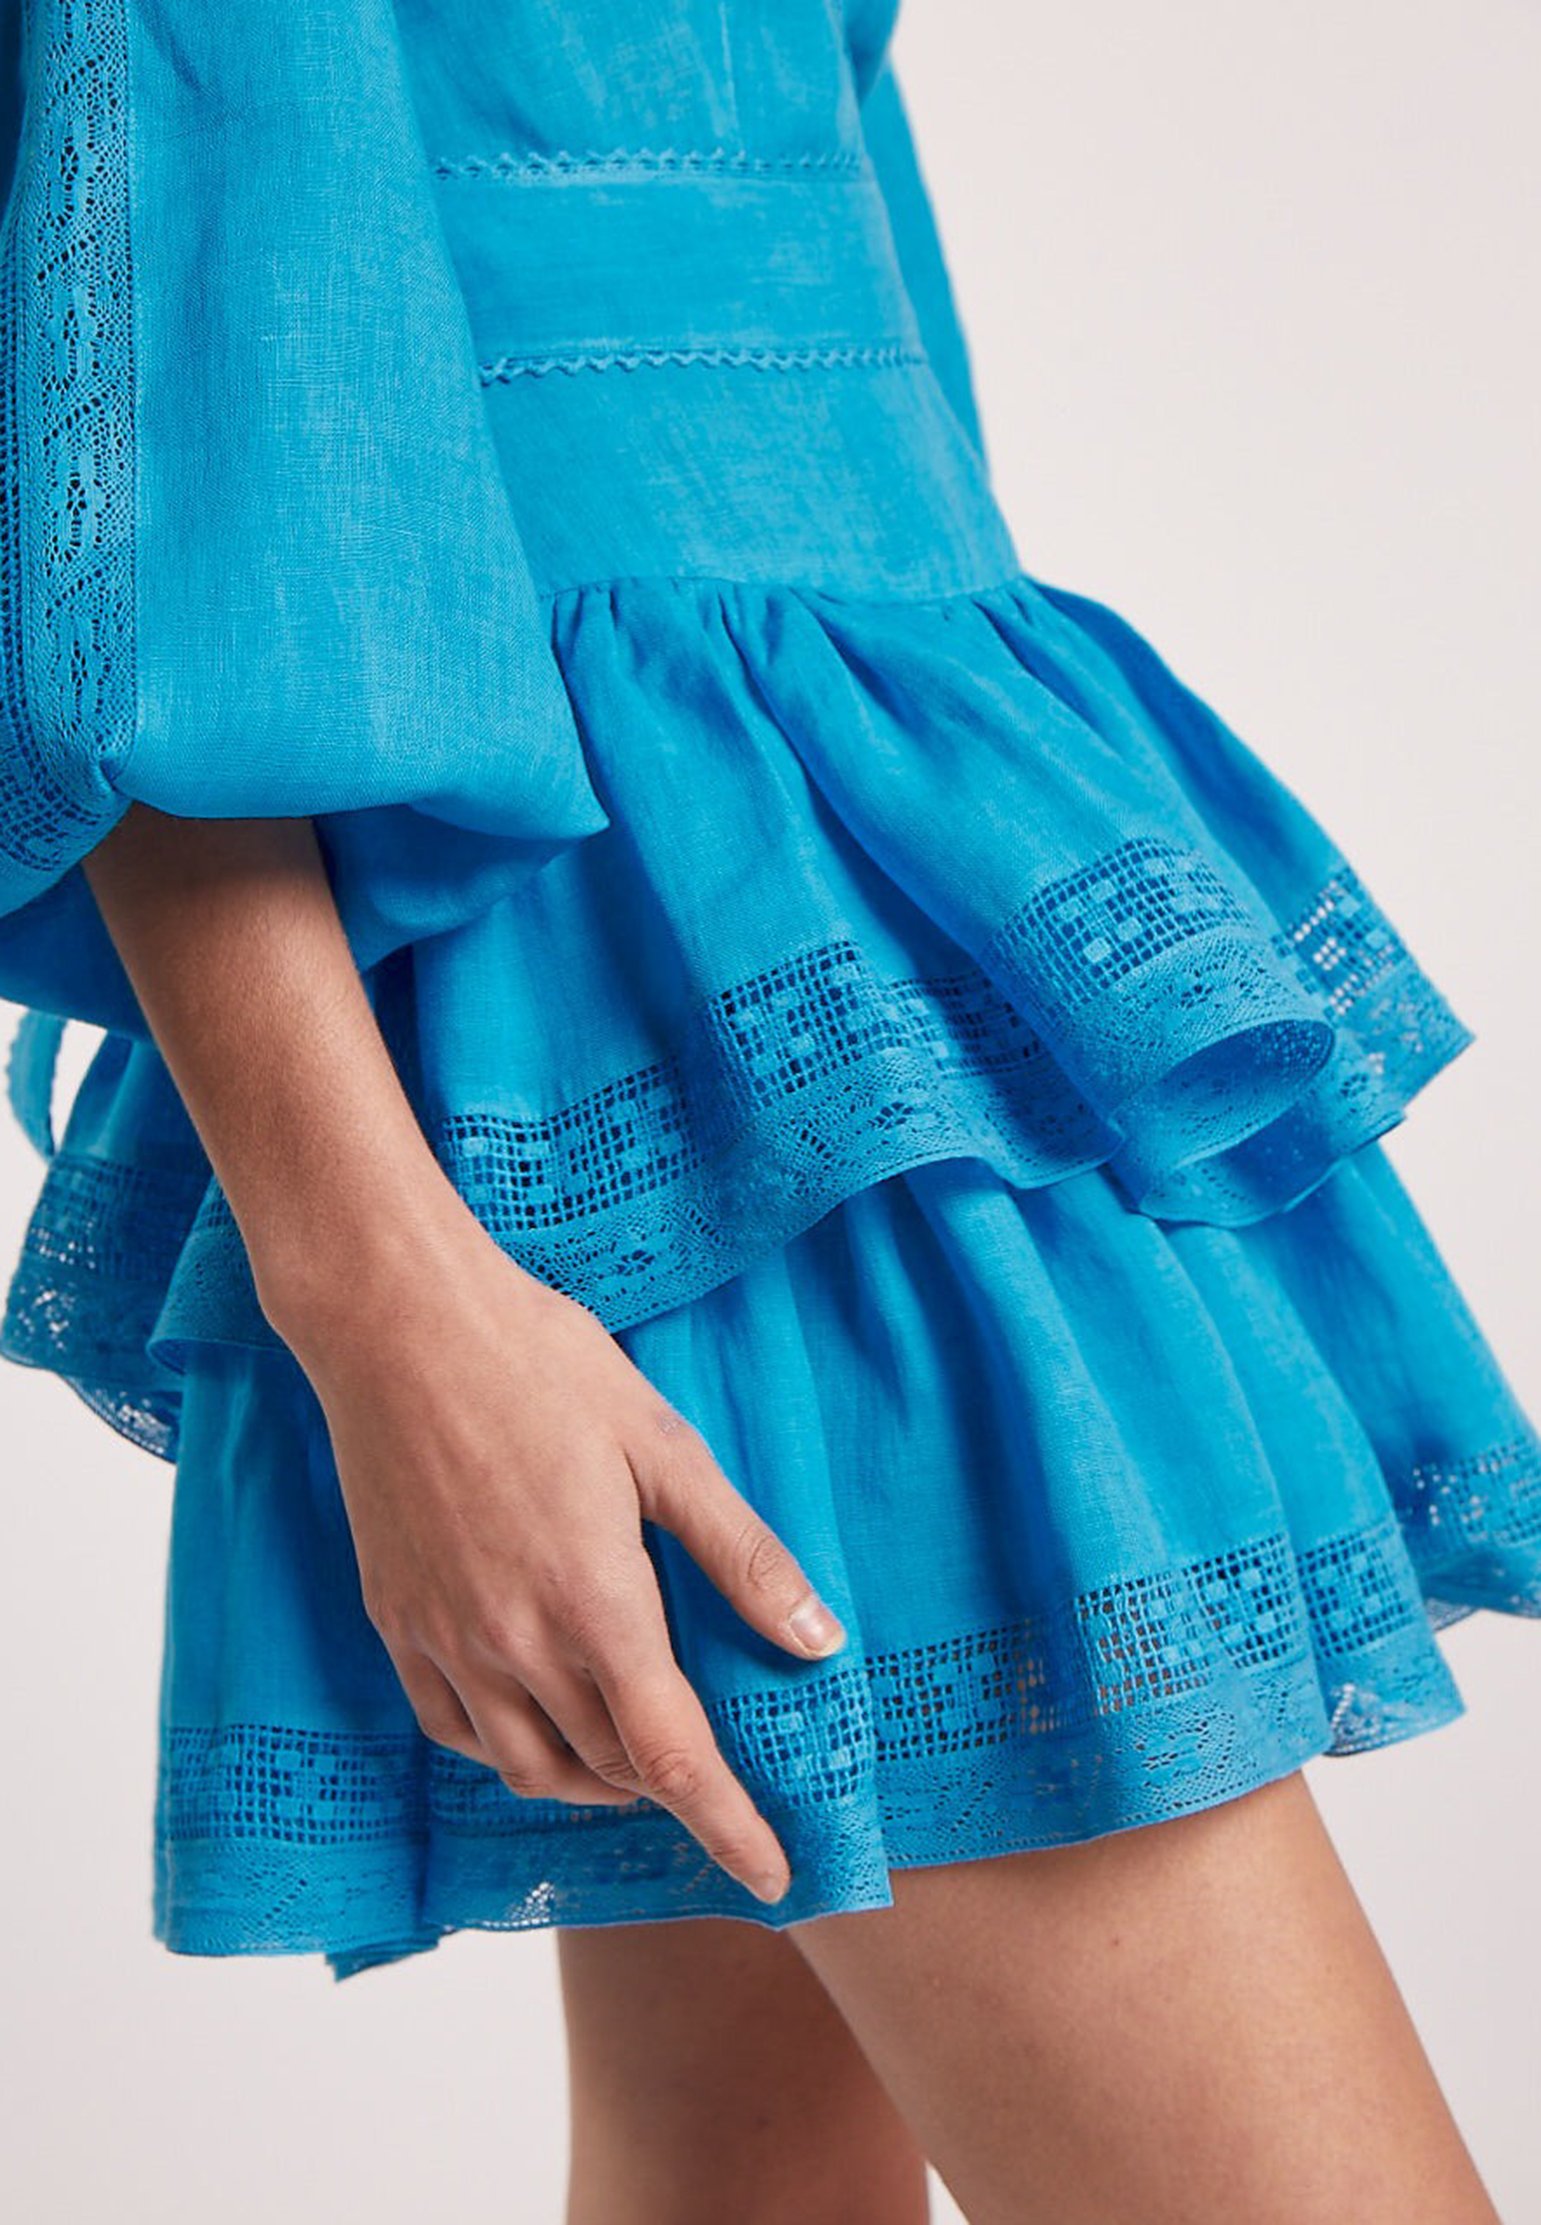 Dress MAIA BERGMAN Color: blue (Code: 2251) in online store Allure